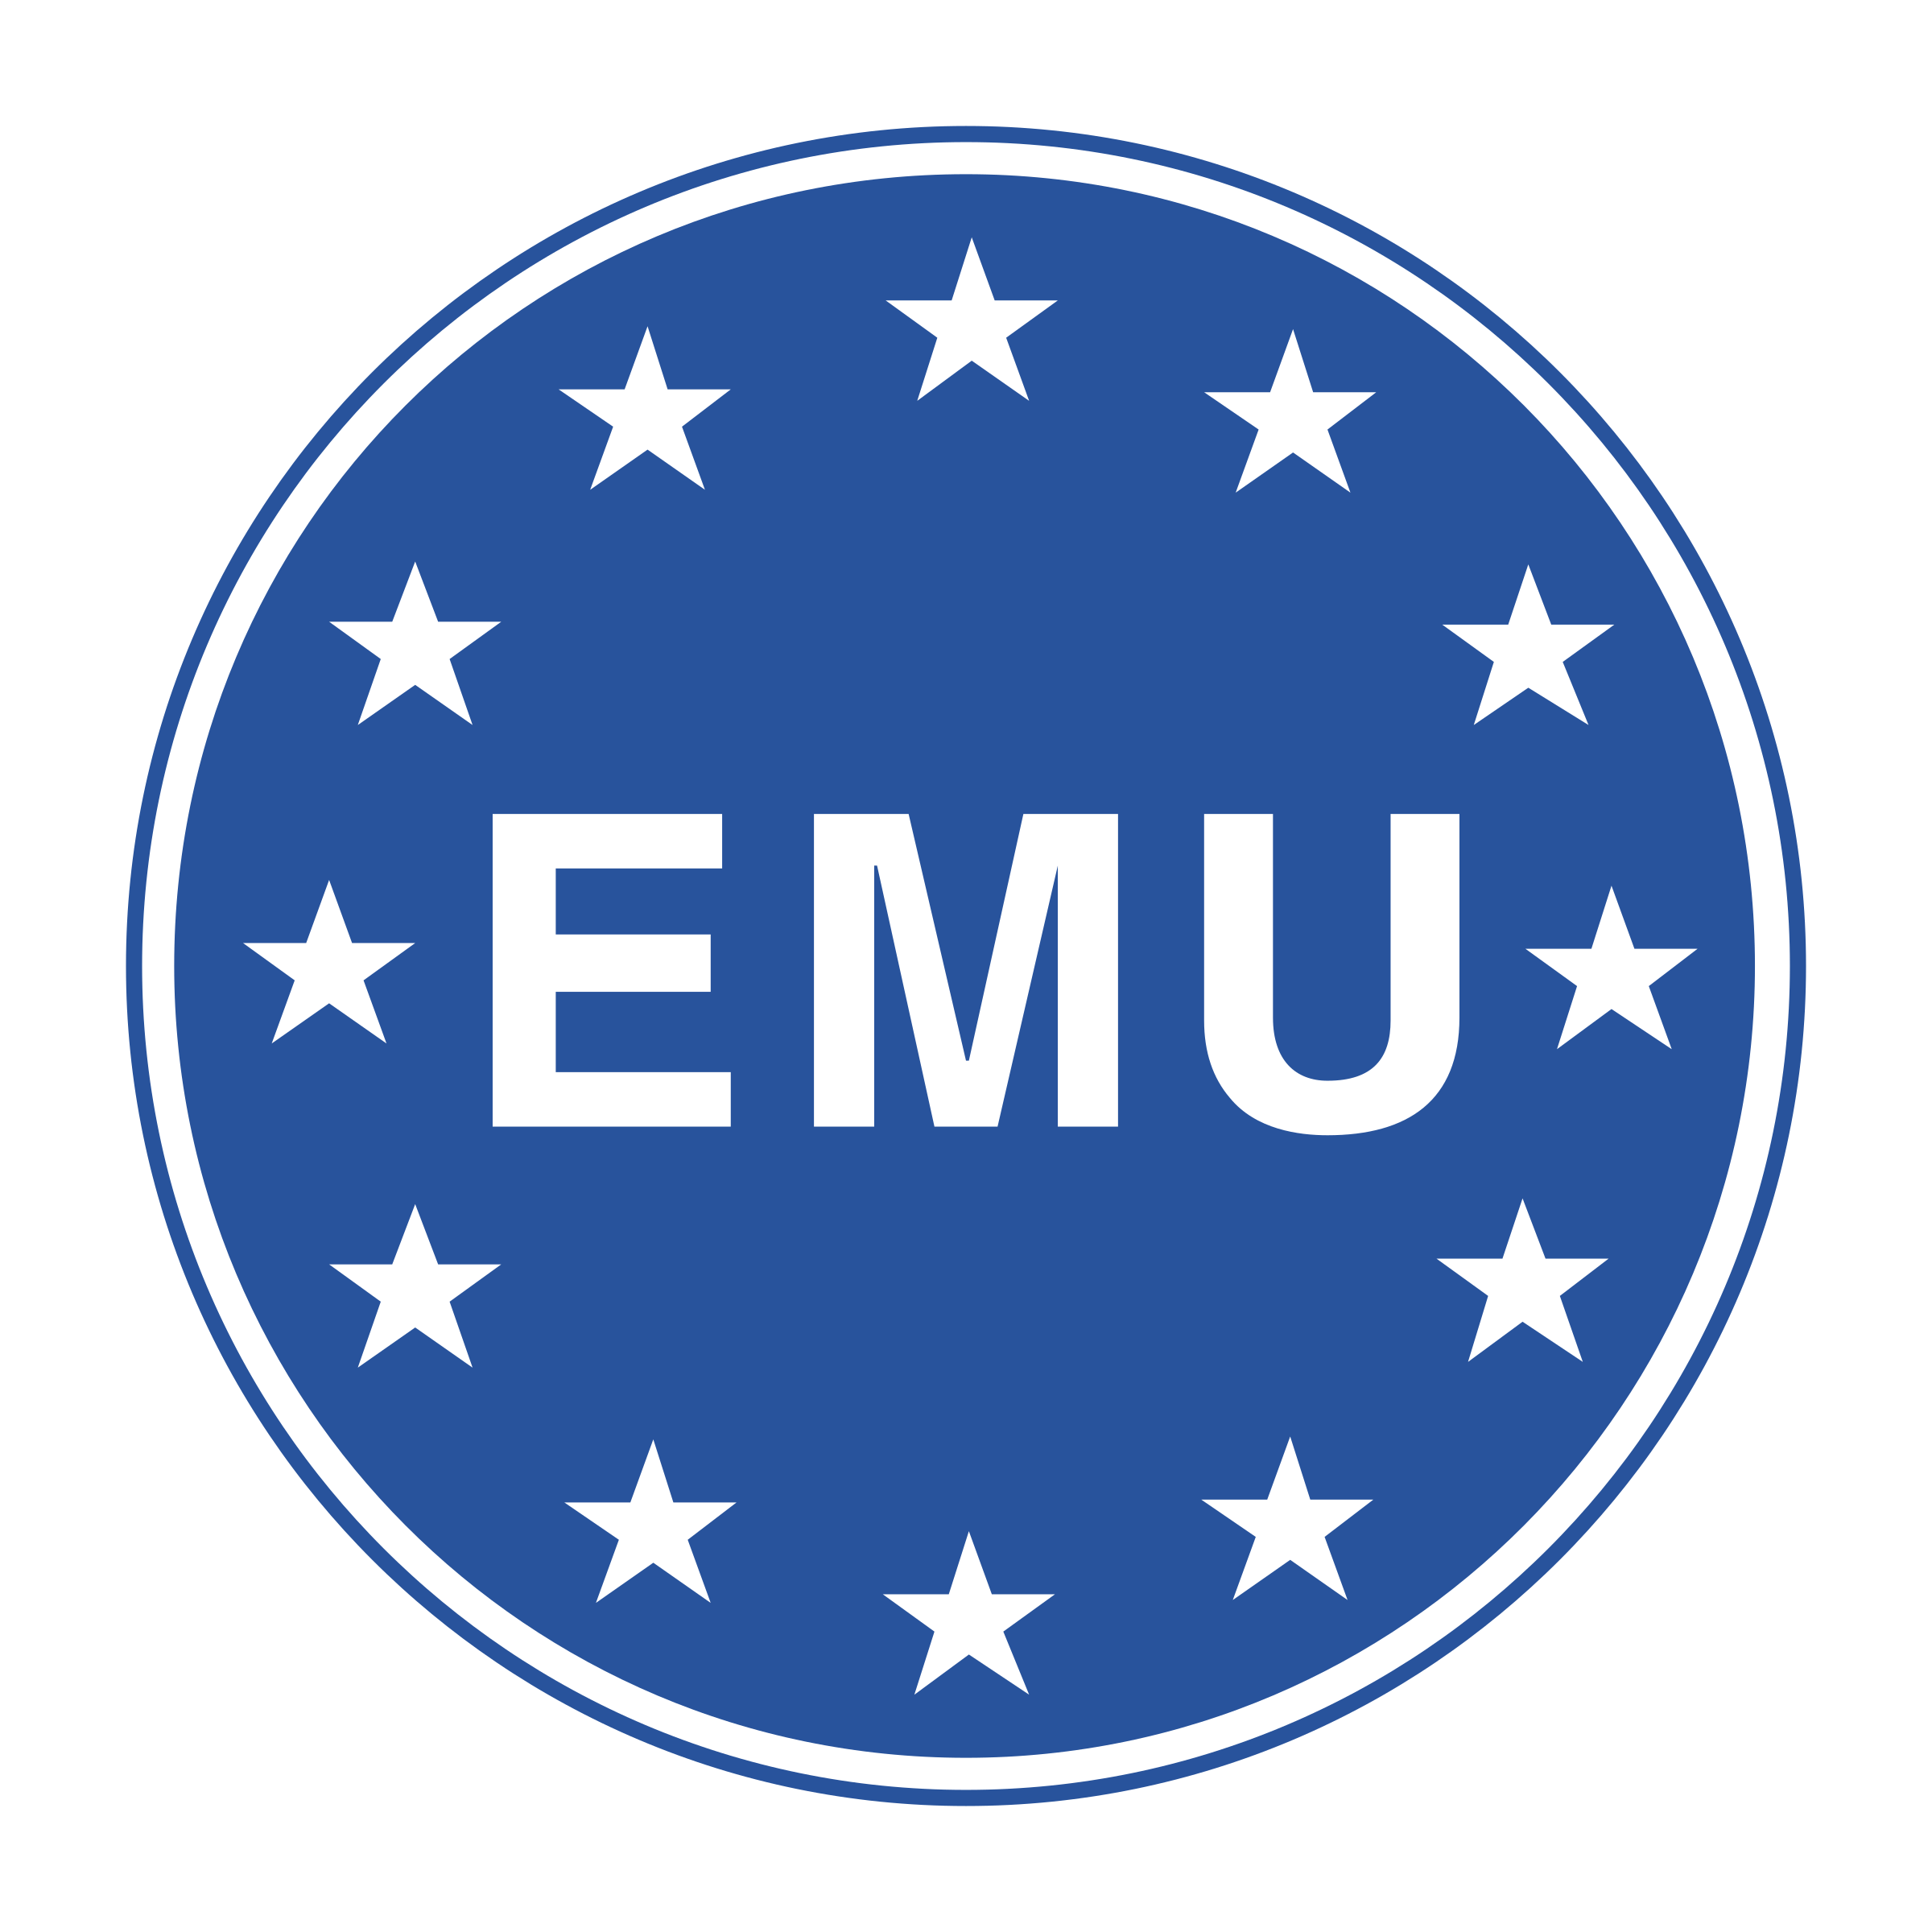 Emu Logo - EMU Logo PNG Transparent & SVG Vector - Freebie Supply